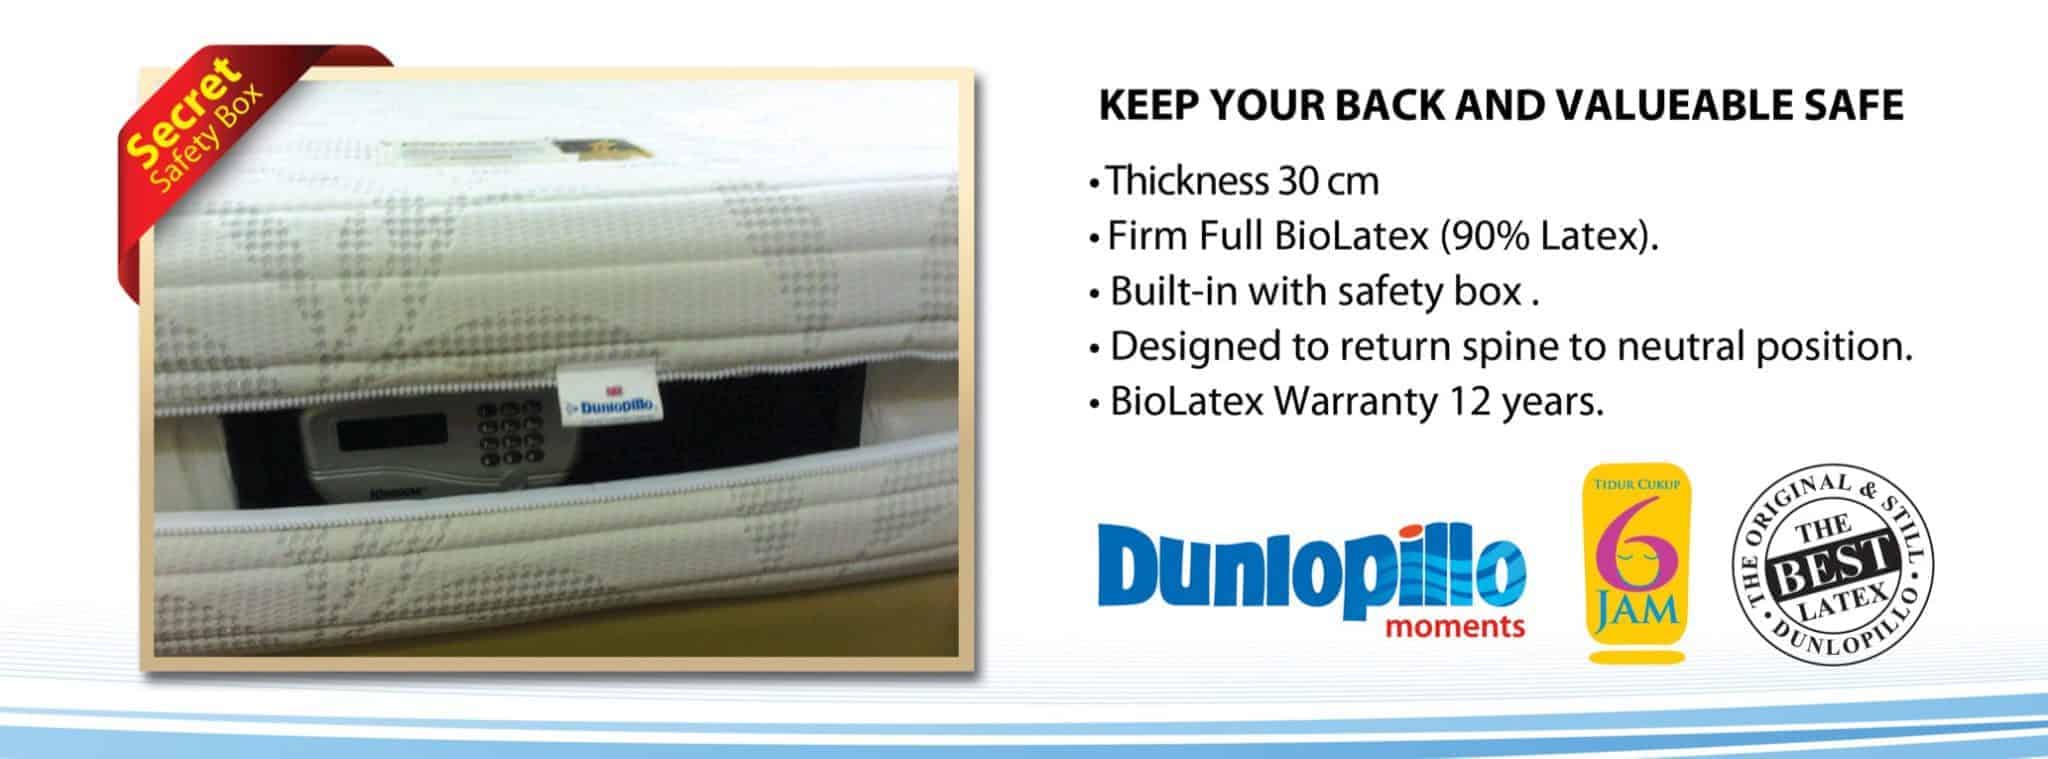 Dunlopillo latex mattress with safe